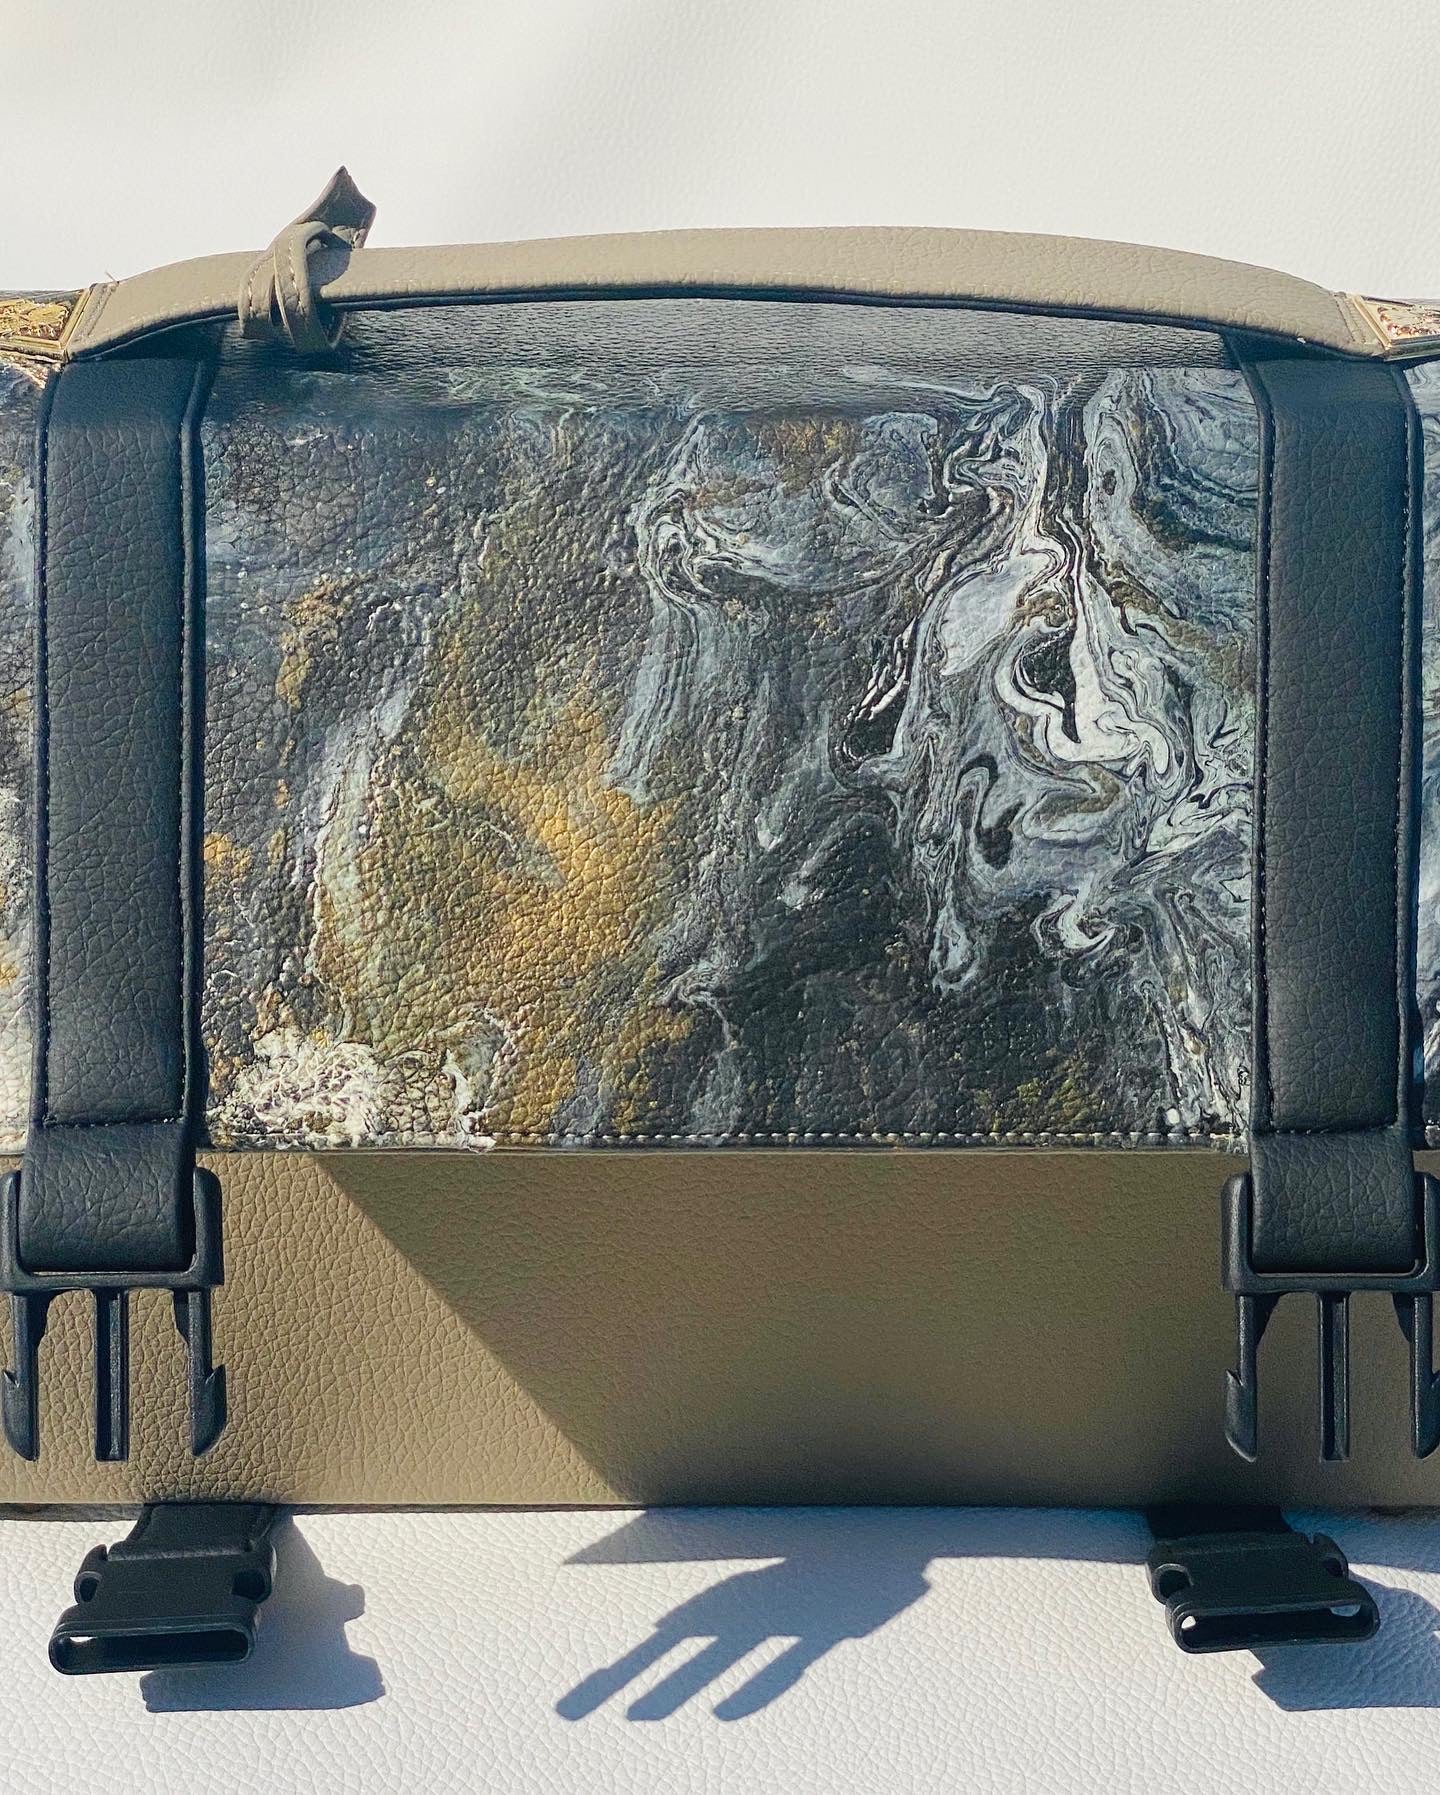 “Galactic Universe” Art Collection Handbag